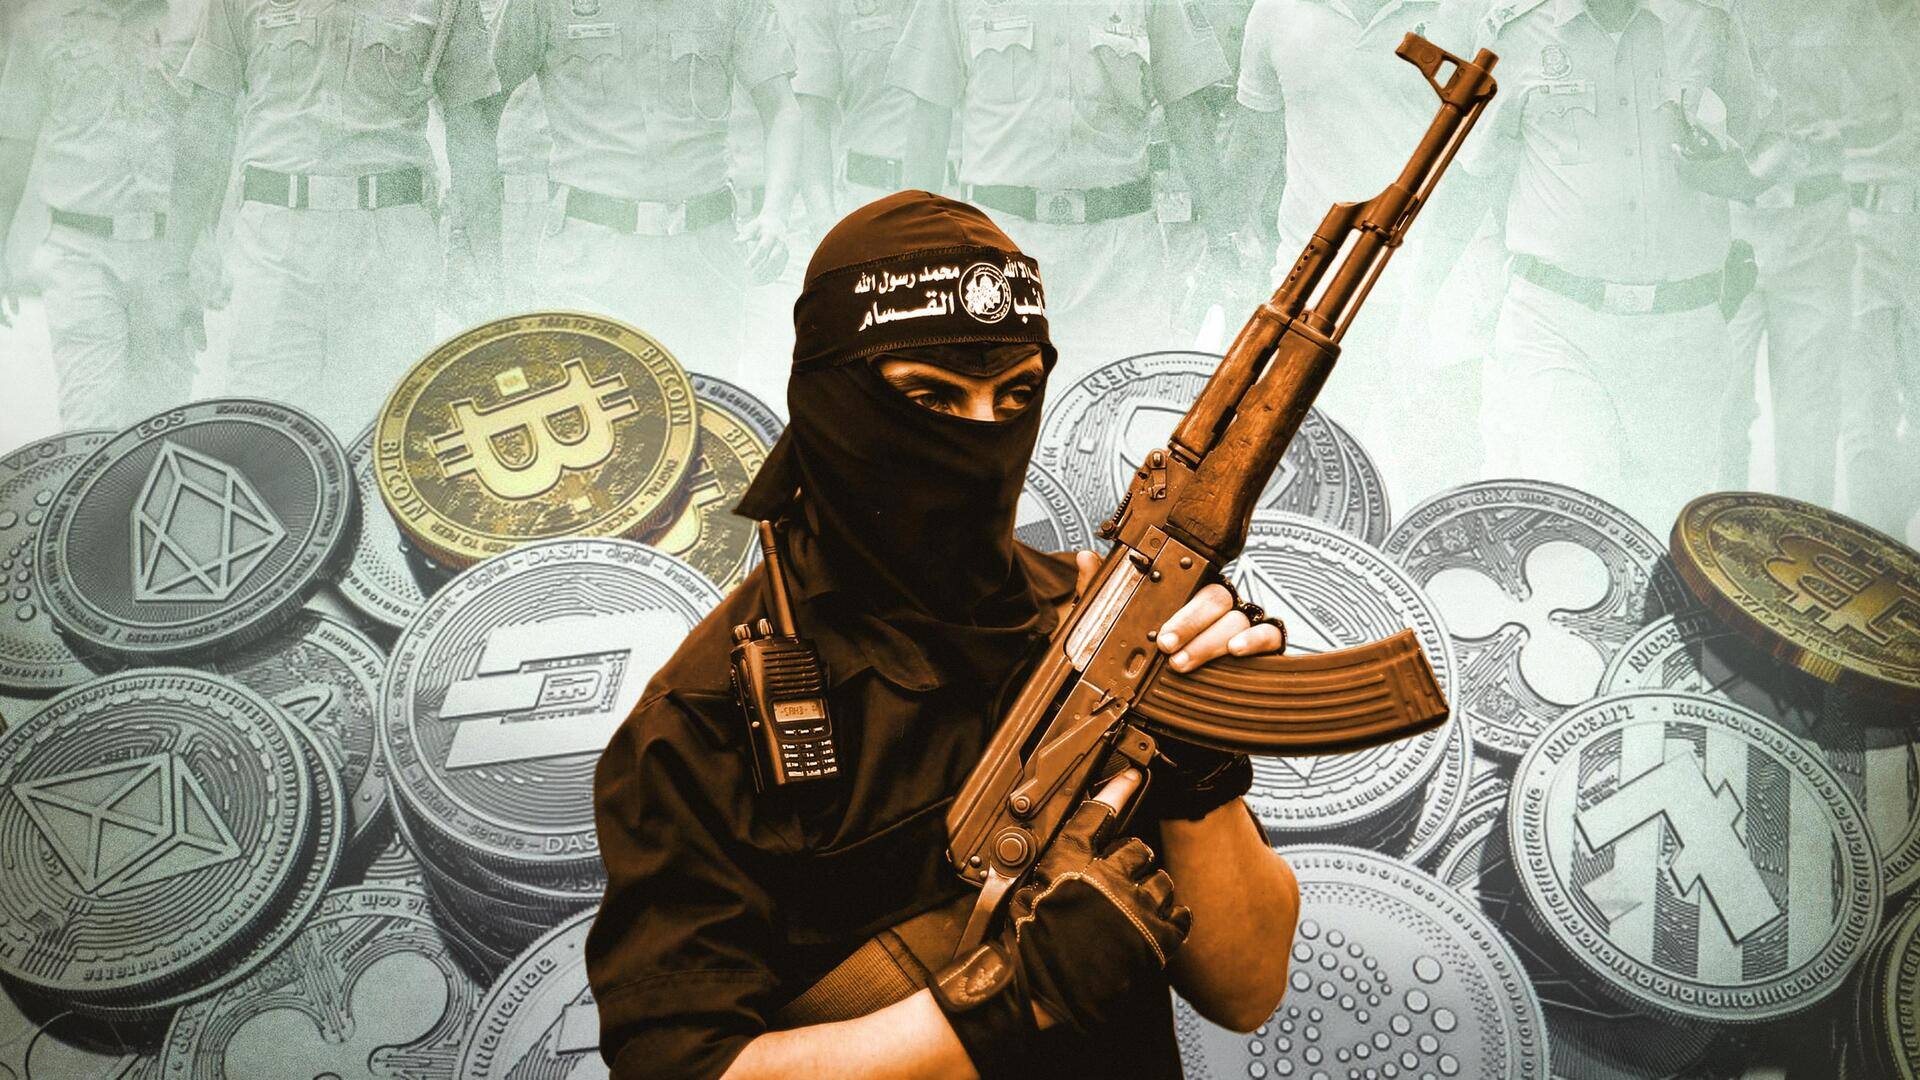 Hamas Cryptocurrency: దిల్లీలో దొంగిలించిన క్రిప్టోకరెన్సీ.. హమాస్ లీడర్ల ఖాతాల్లోకి బదిలీ 